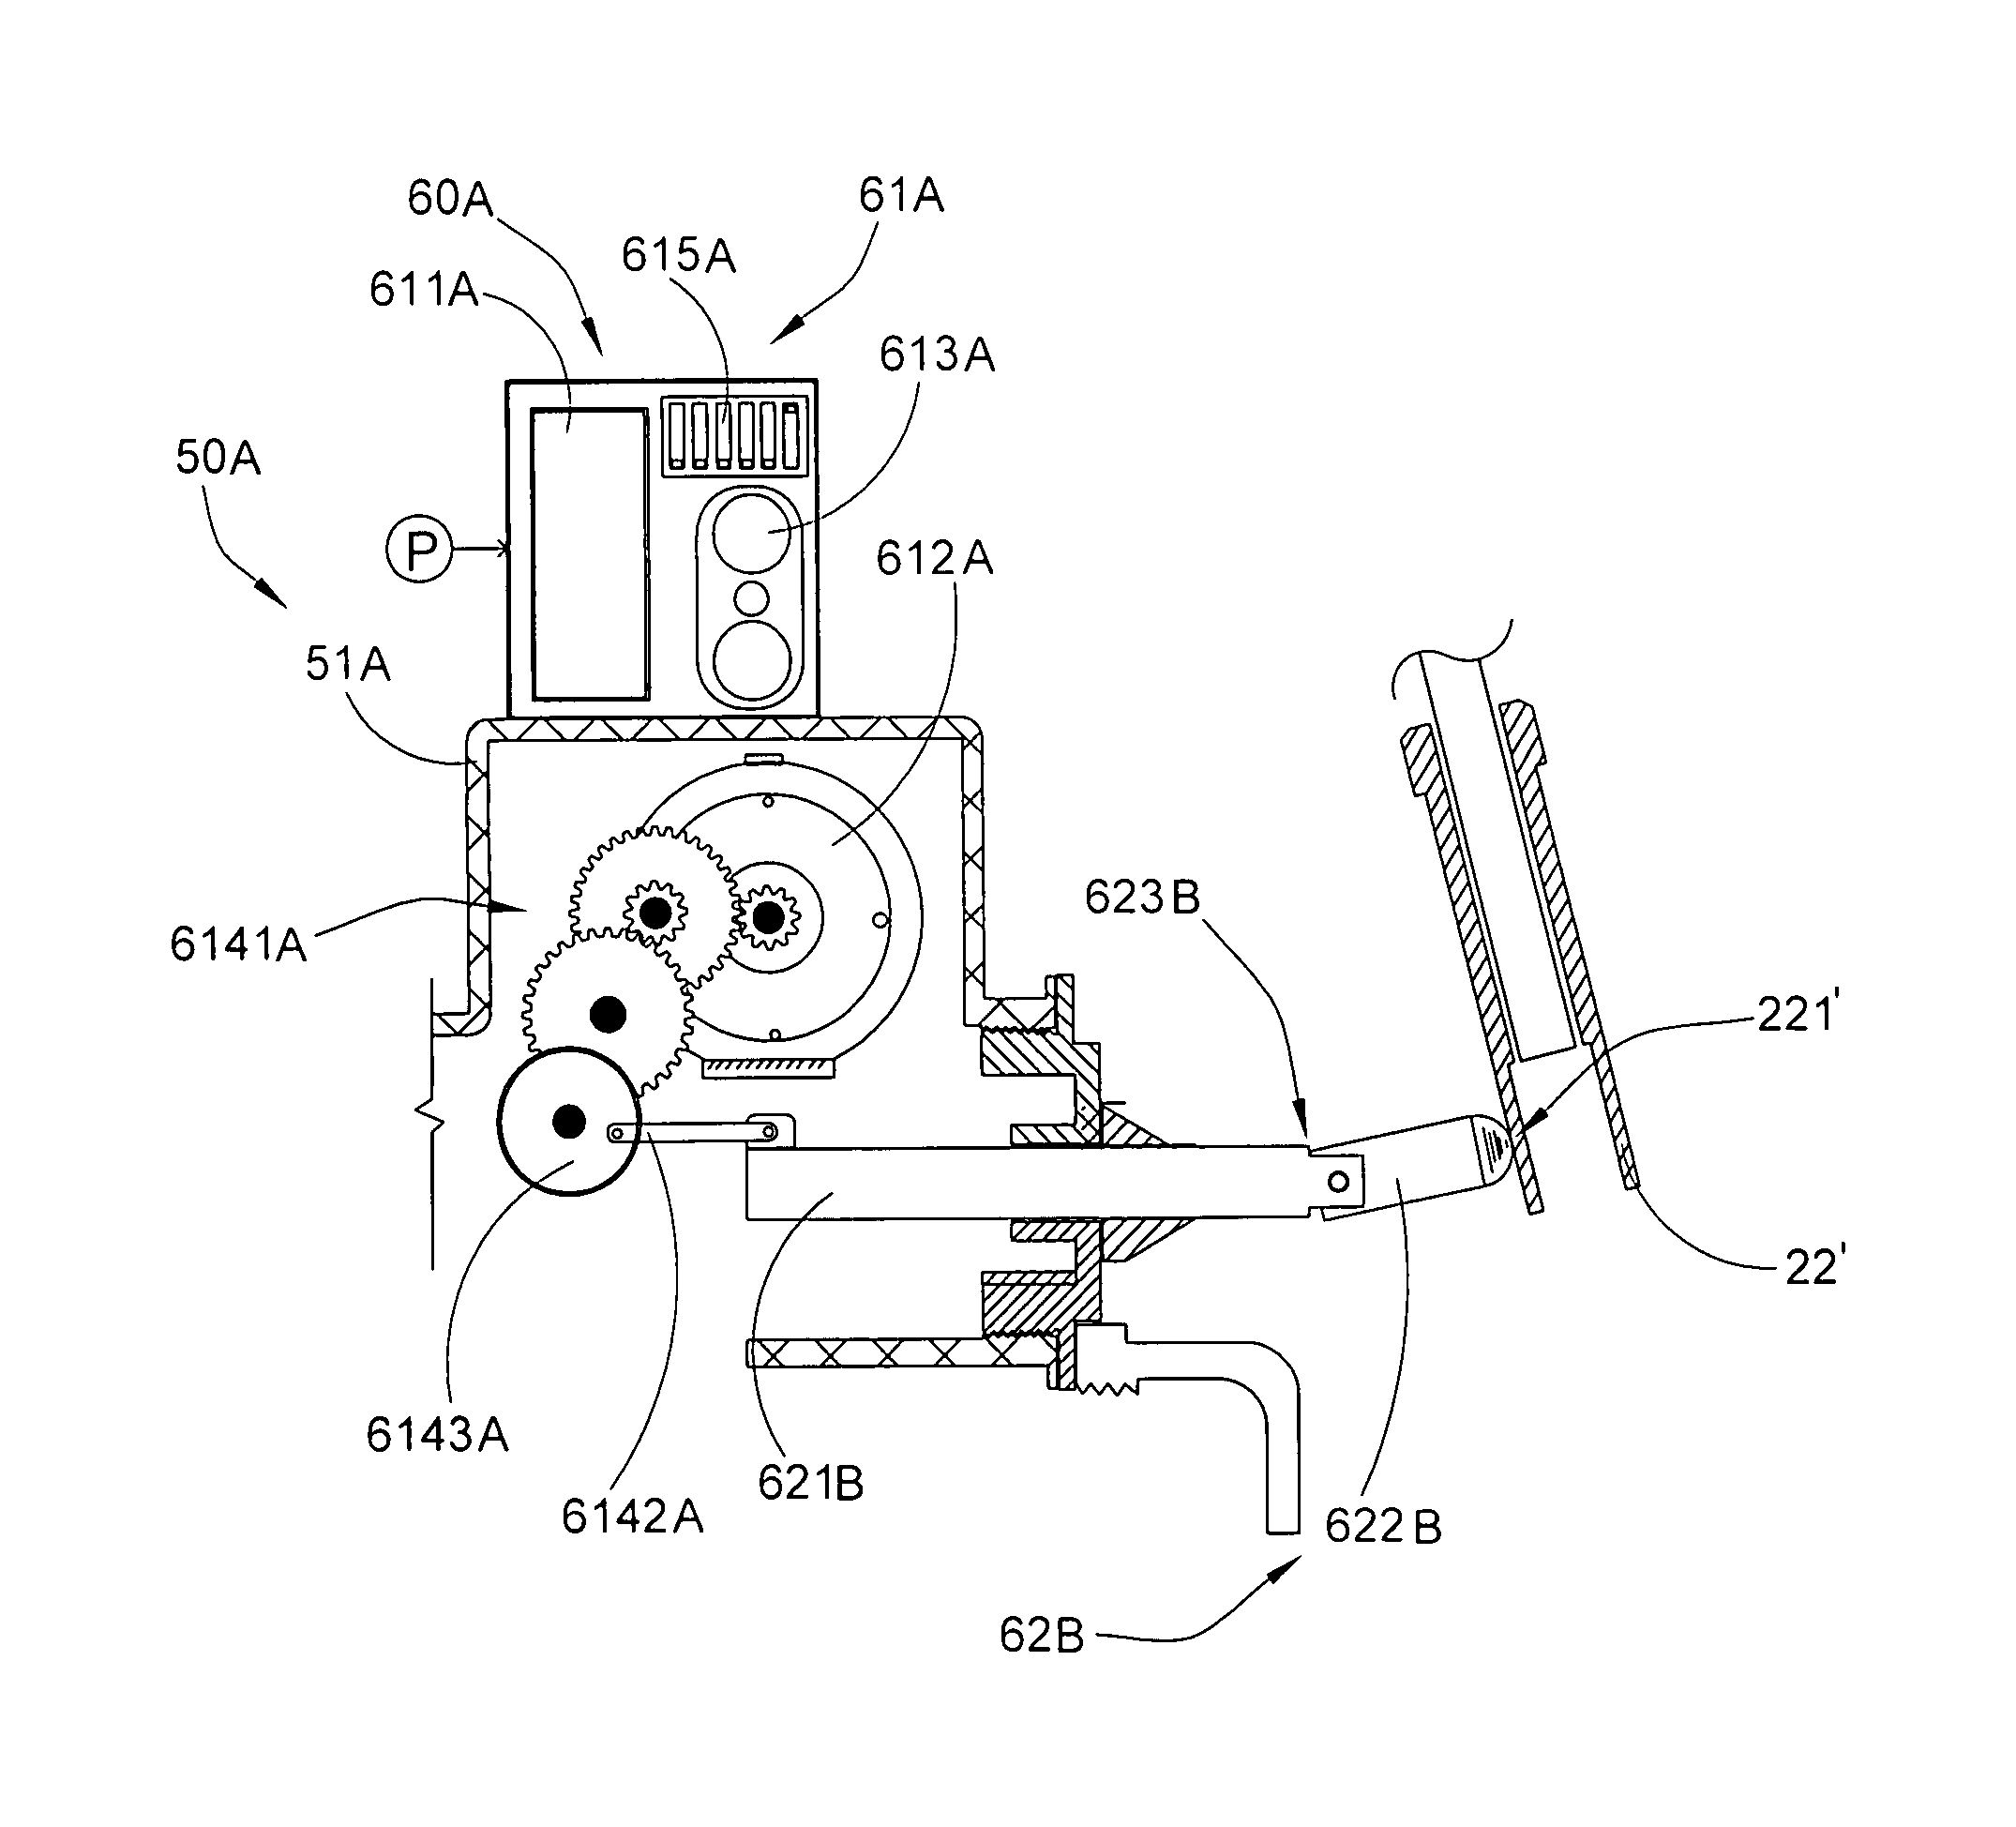 Motorized automate/manual push button system